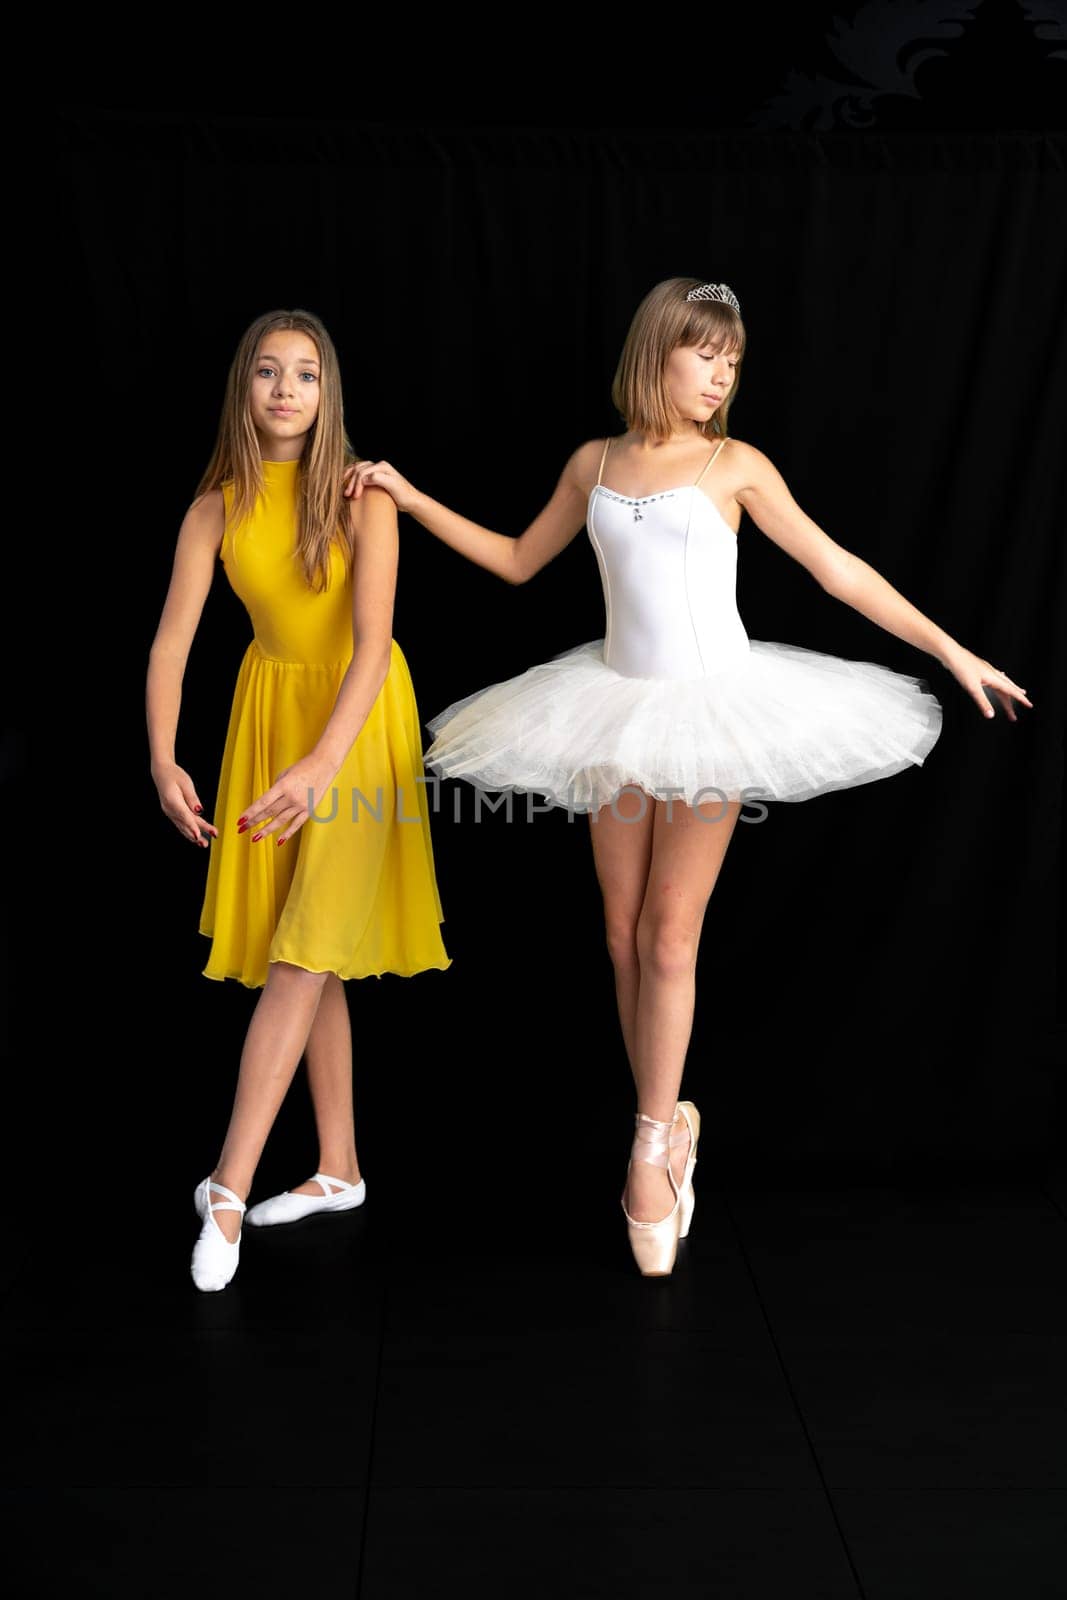 teenage ballerinas in the studio, portrait on a black background by Edophoto